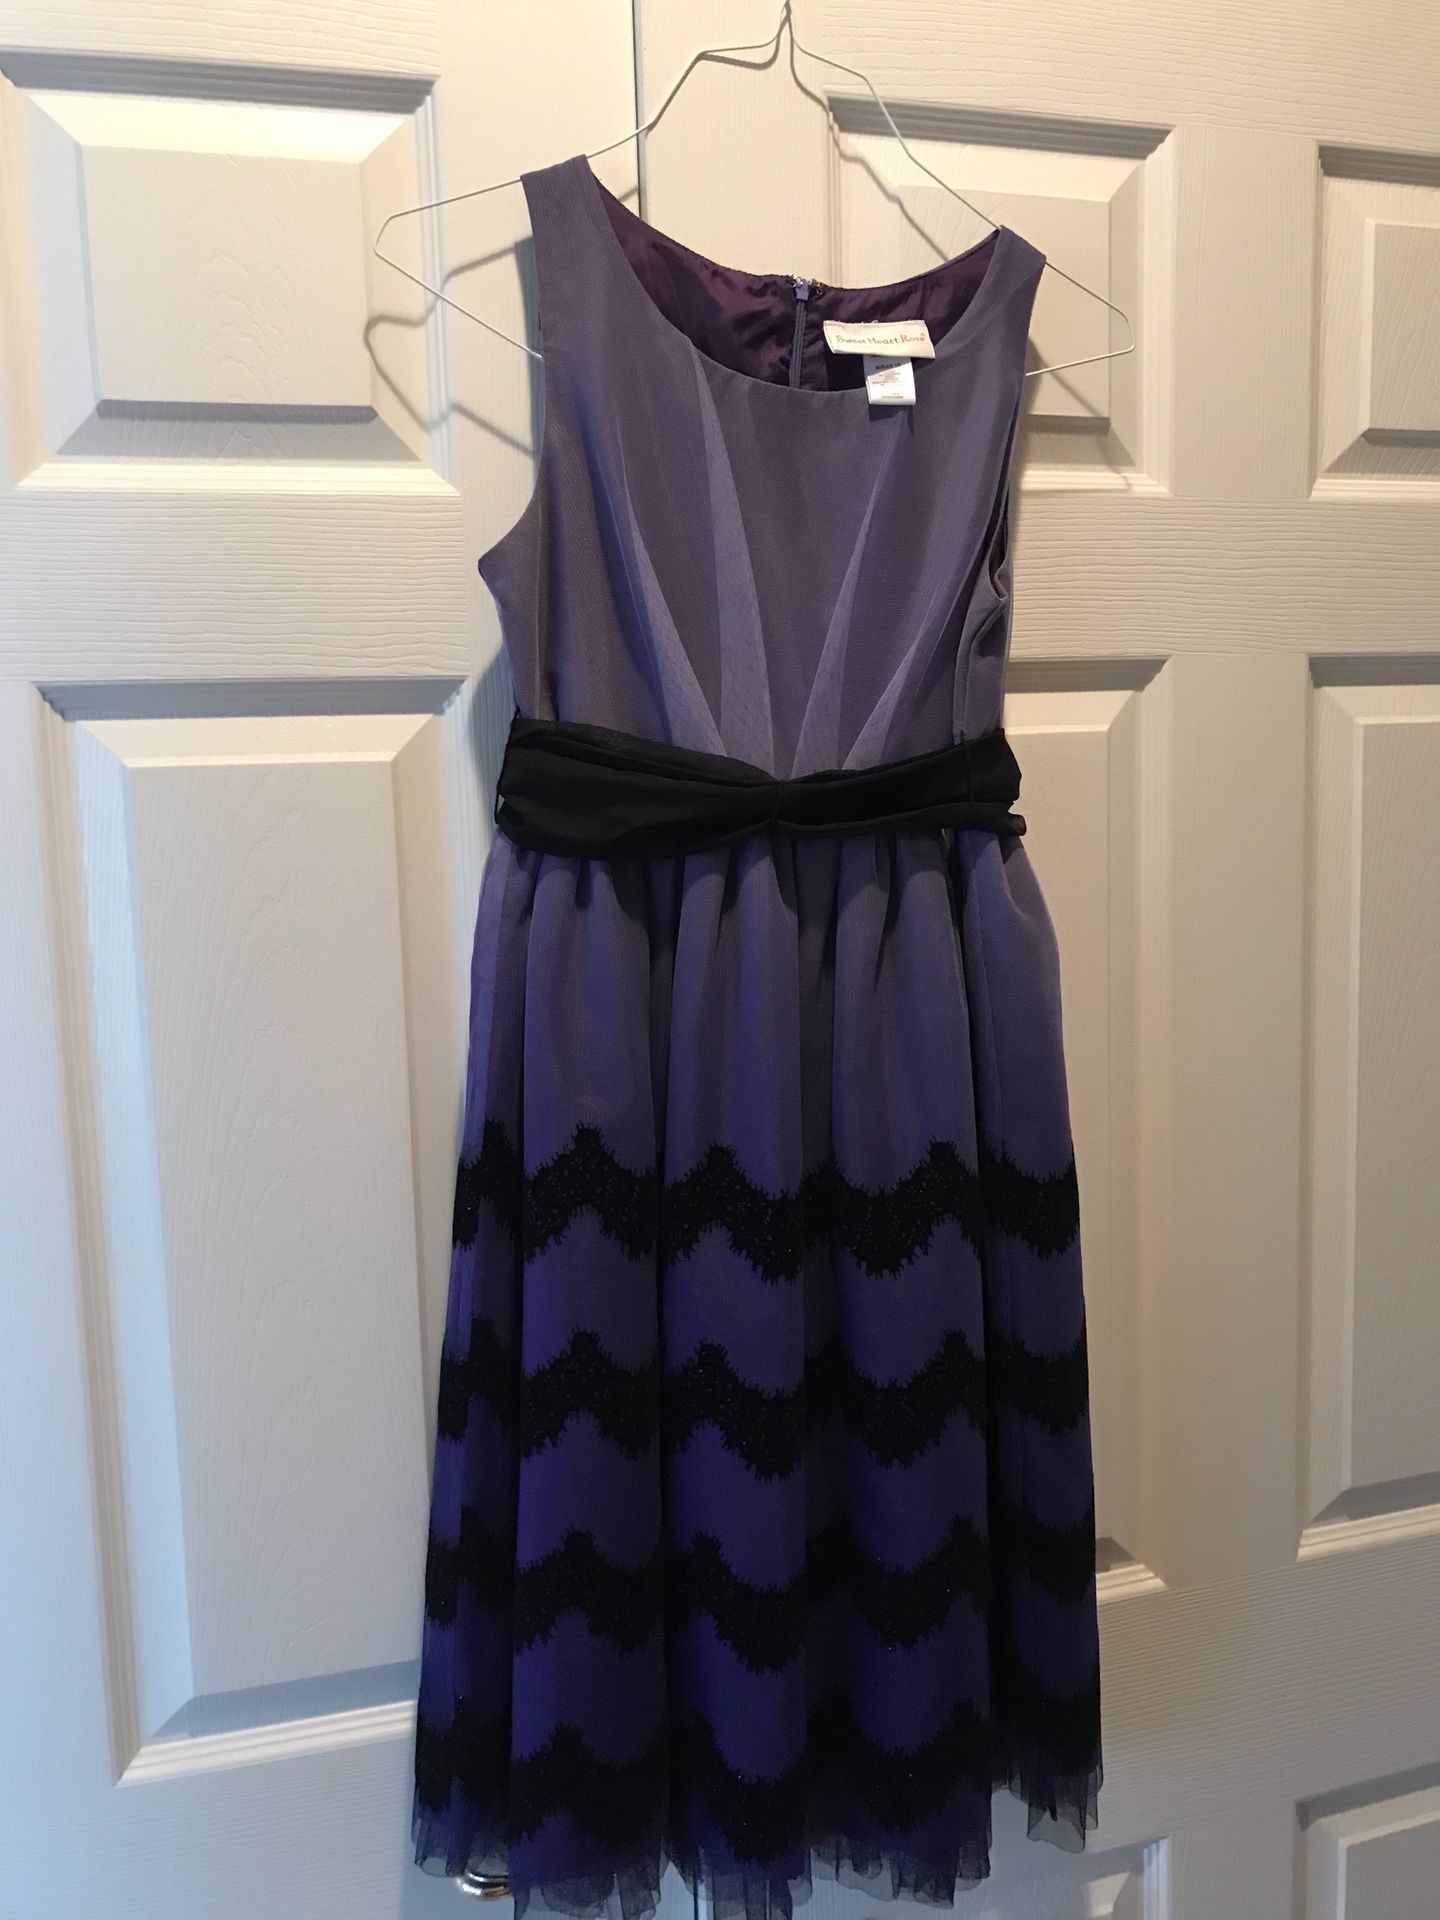 Size 16 Purple dress